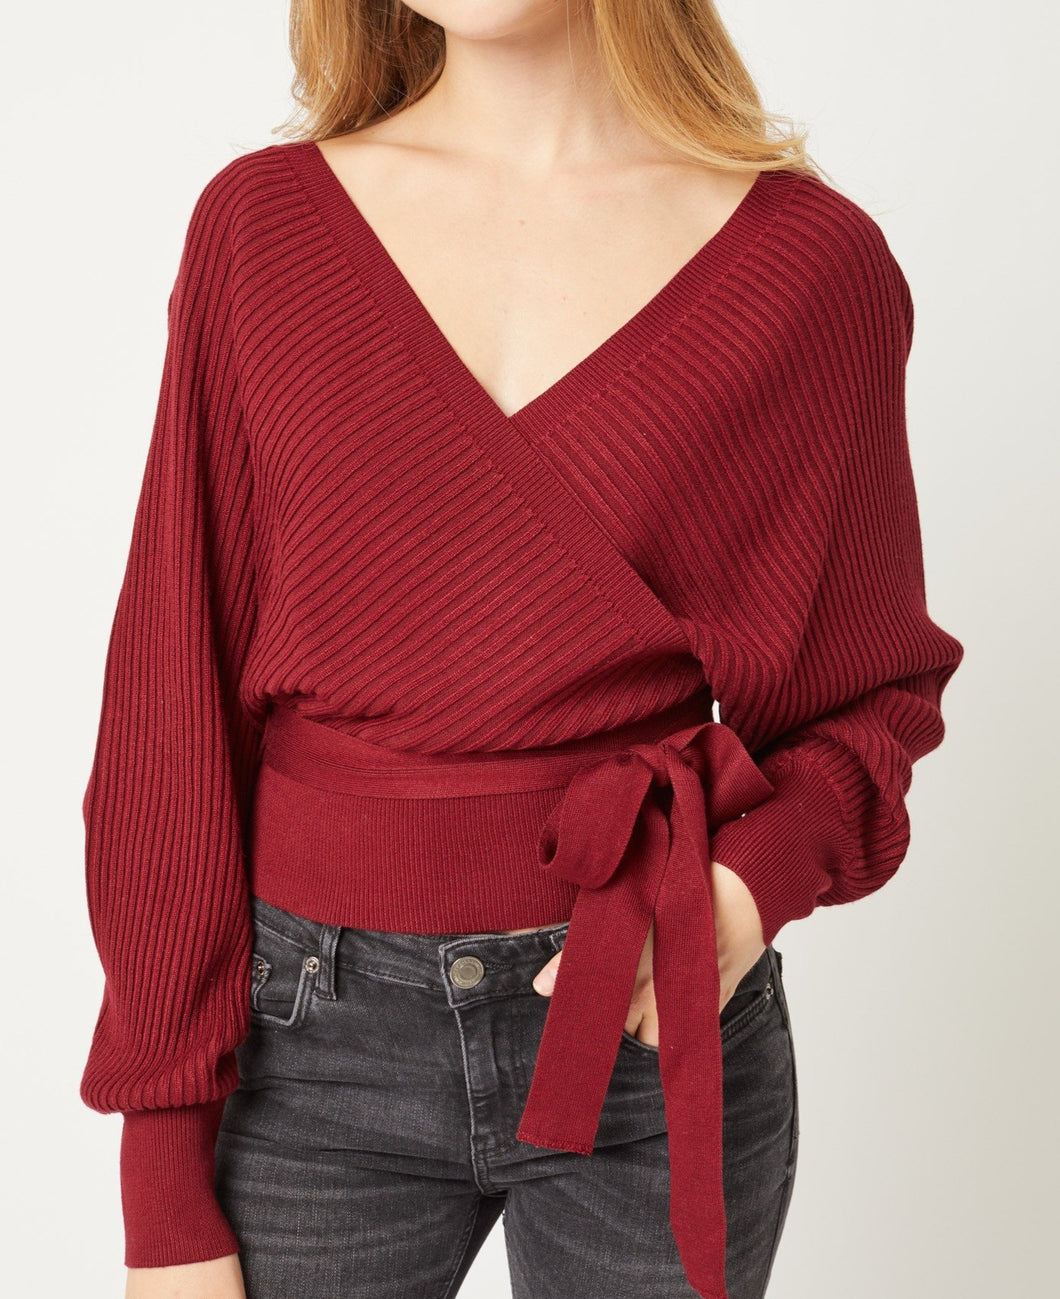 Wrap Style Sweater Top - CeCe Fashion Boutique